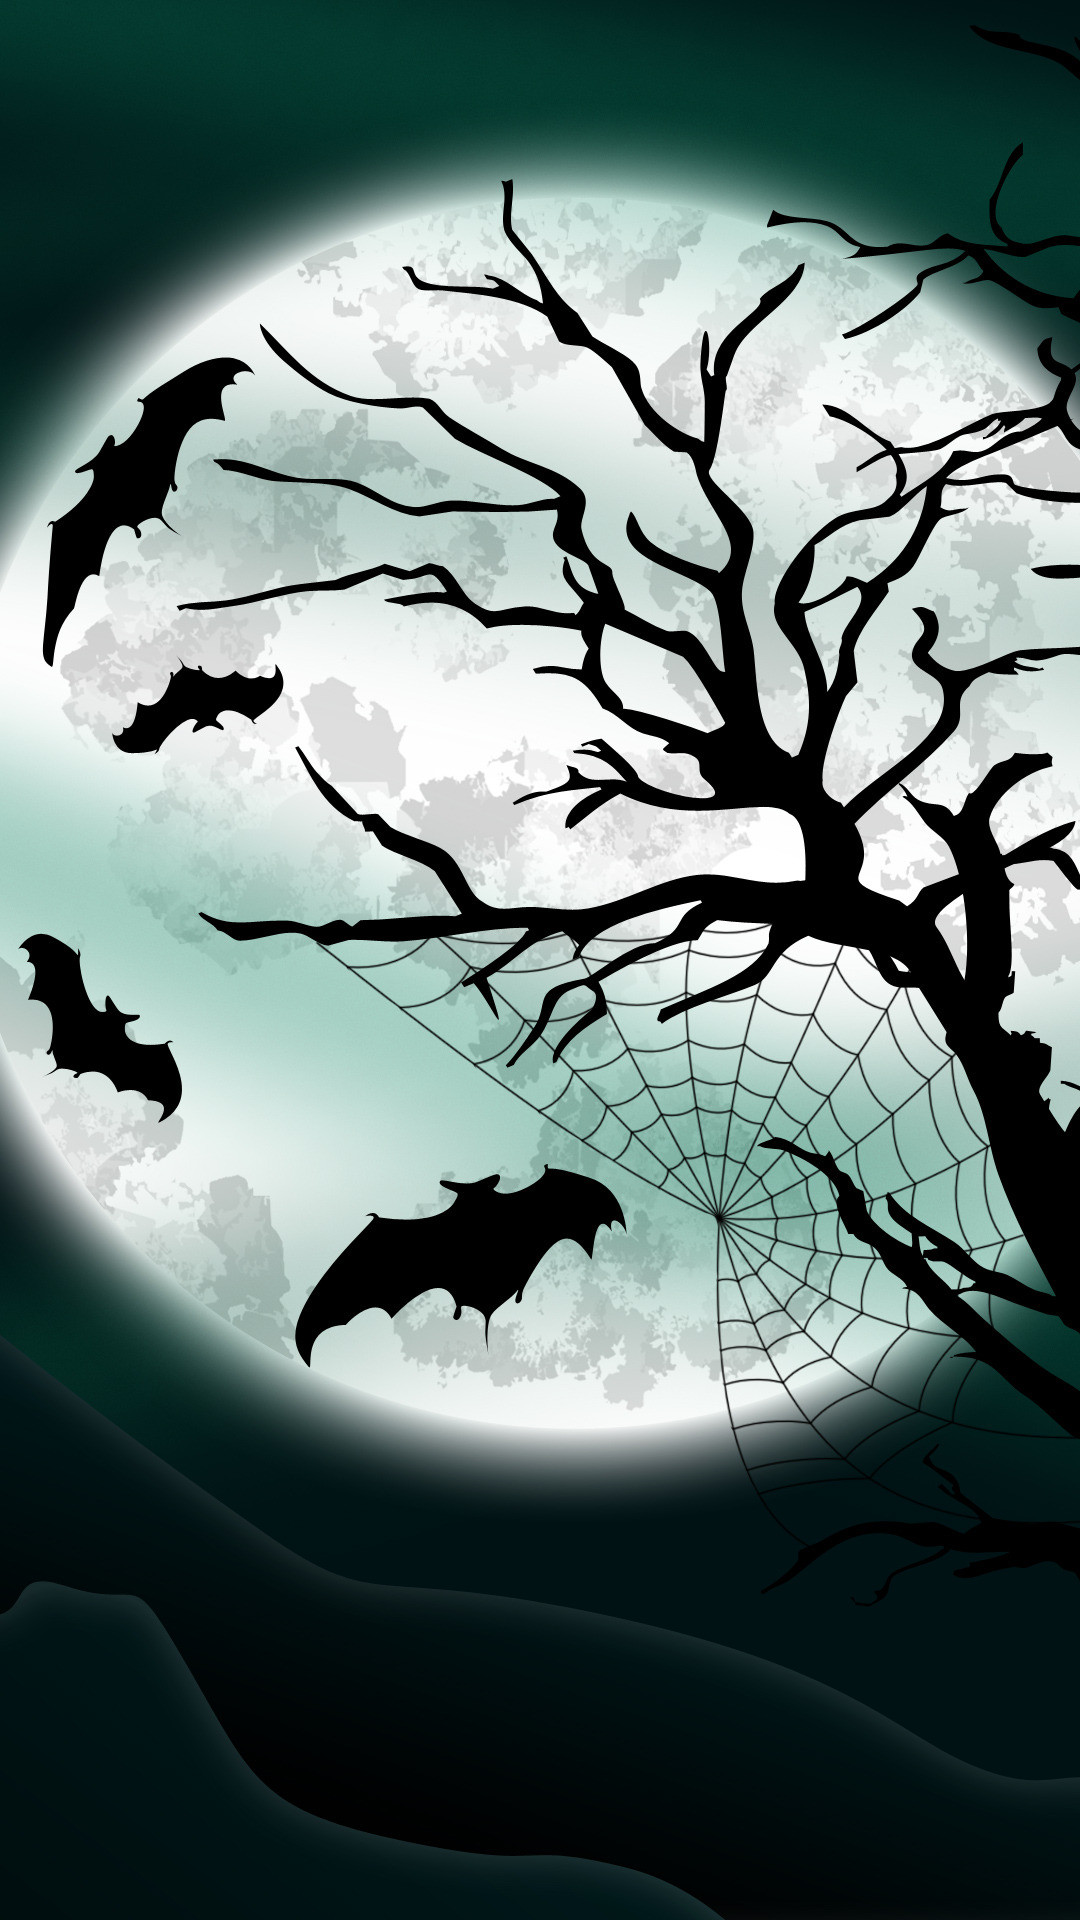 Wallpaper Weekends Halloween Terrors for Yuur iPhone